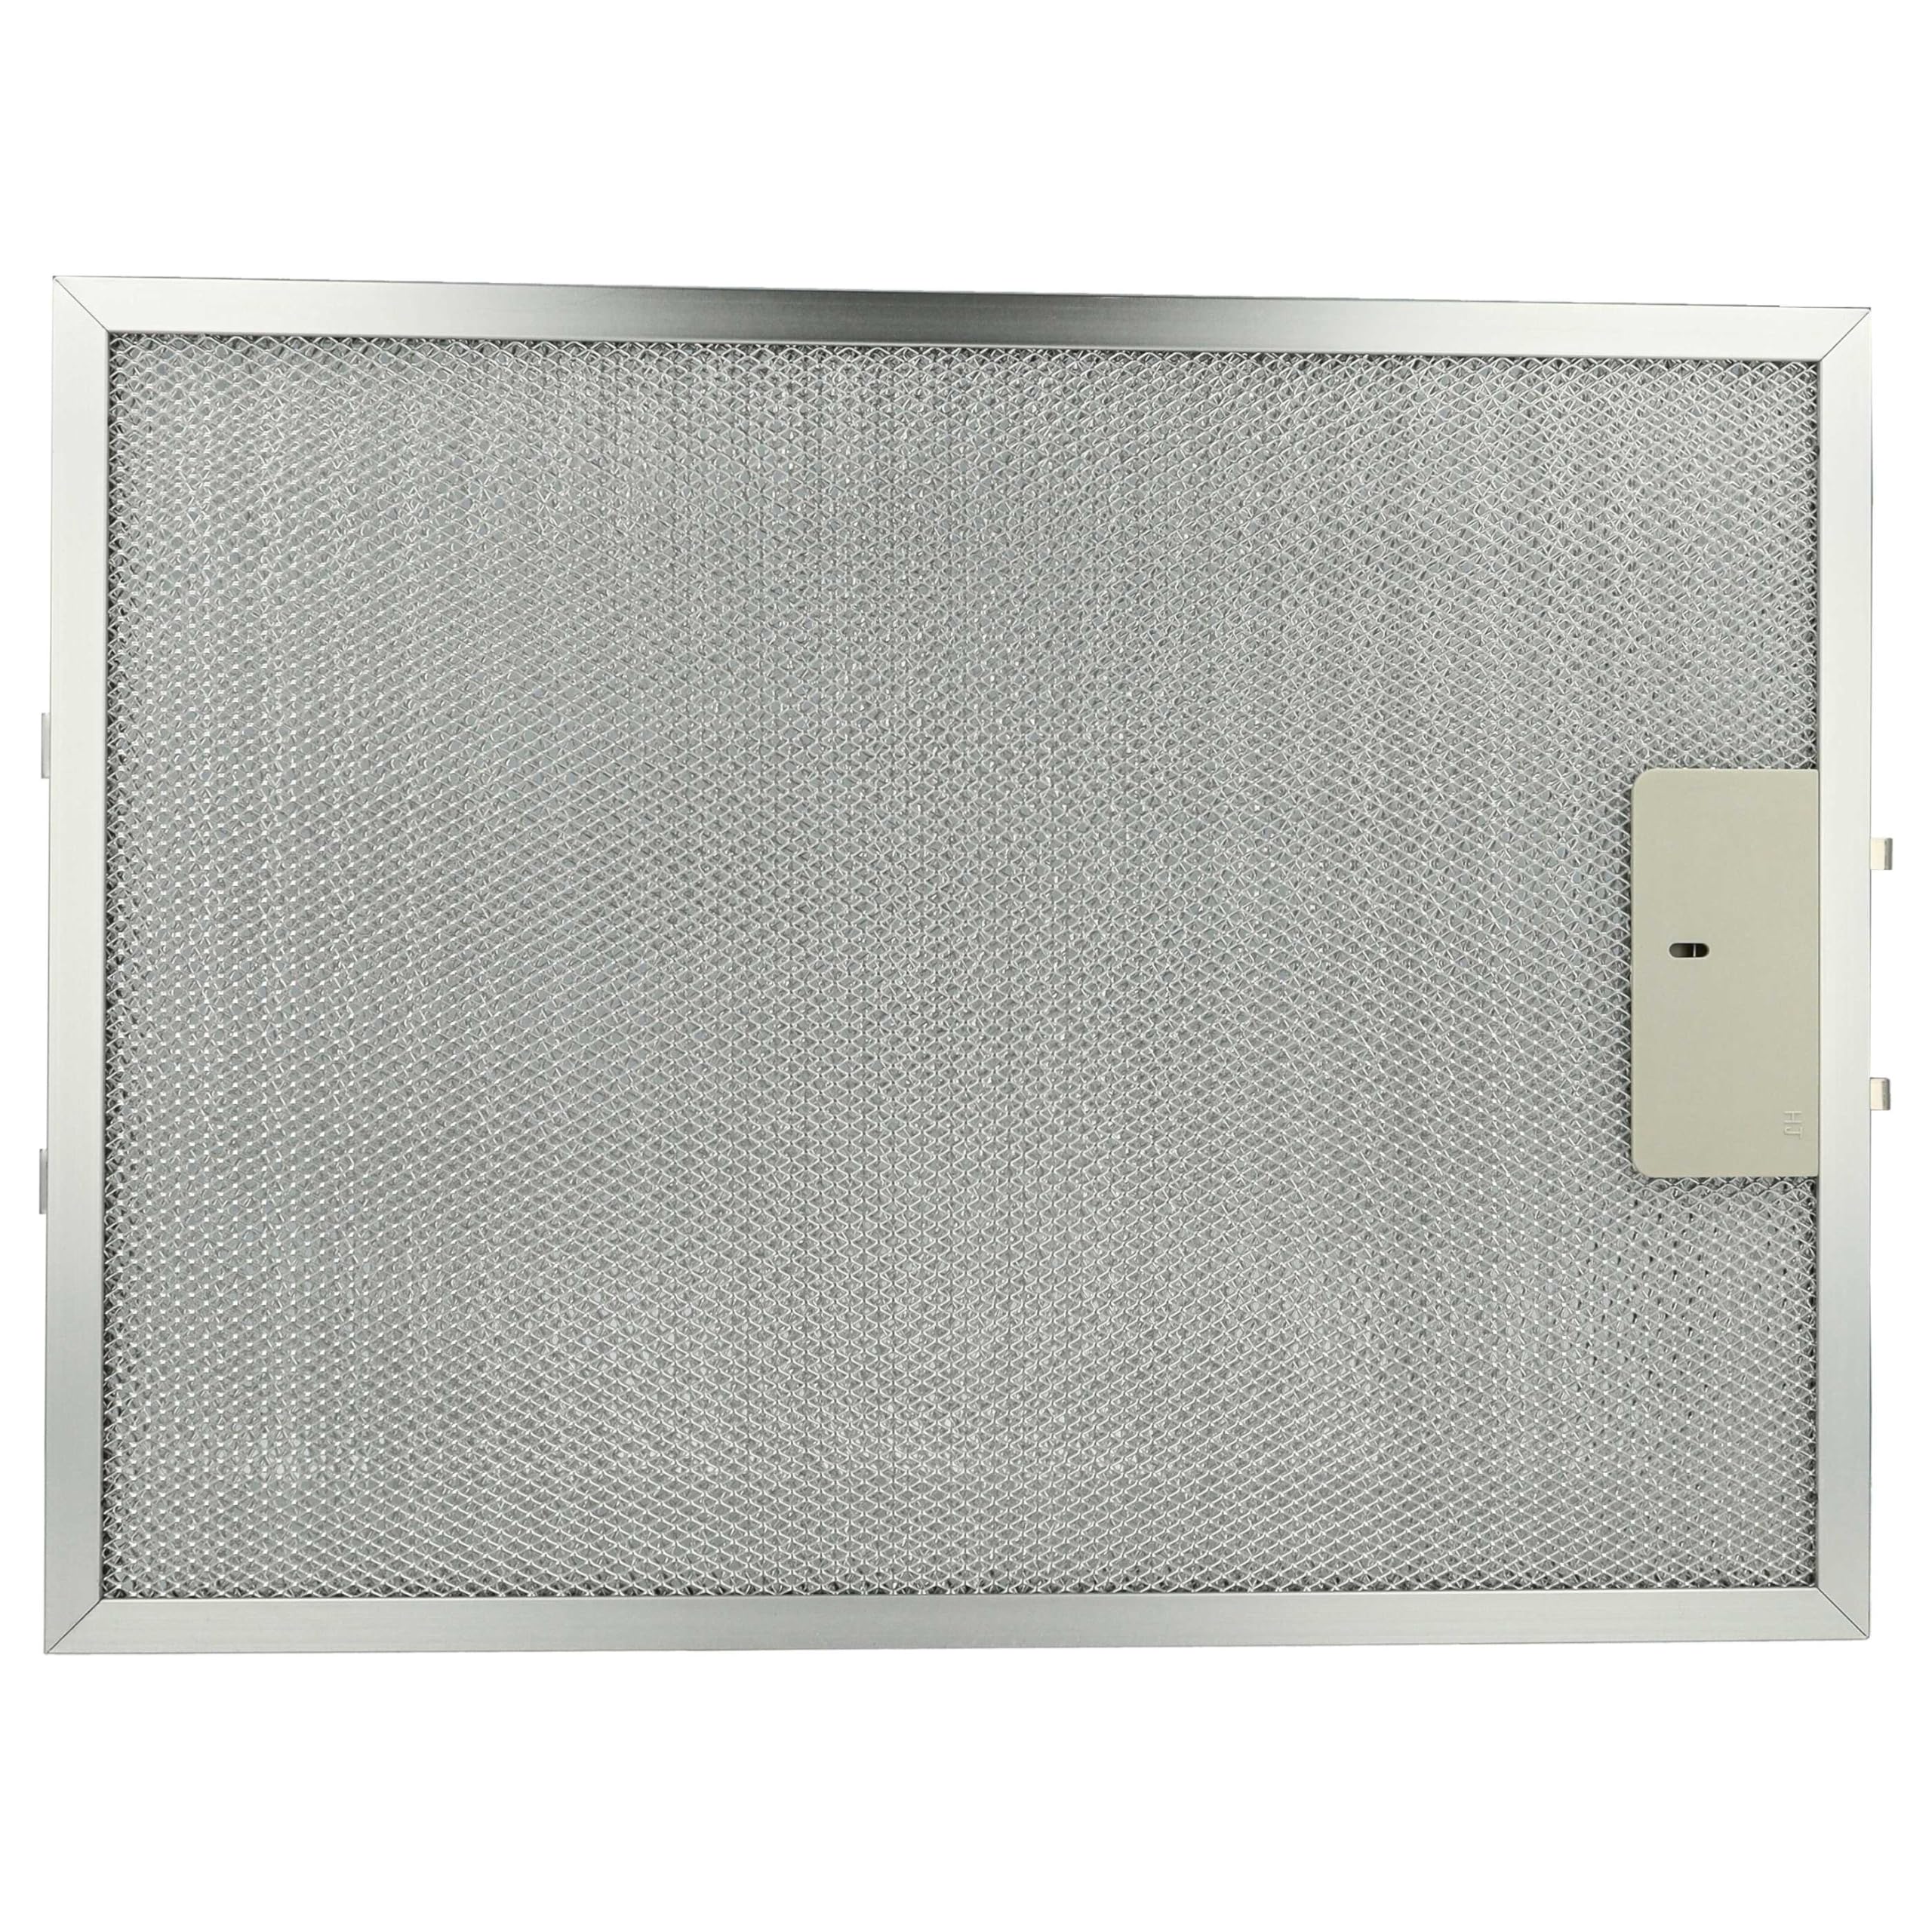 vhbw Filter Metallfettfilter Dauerfilter kompatibel mit AEG DU 4160-M/UE 94212278900 Dunstabzugshaube - 38 x 28,3 x 0,9 cm, Metall